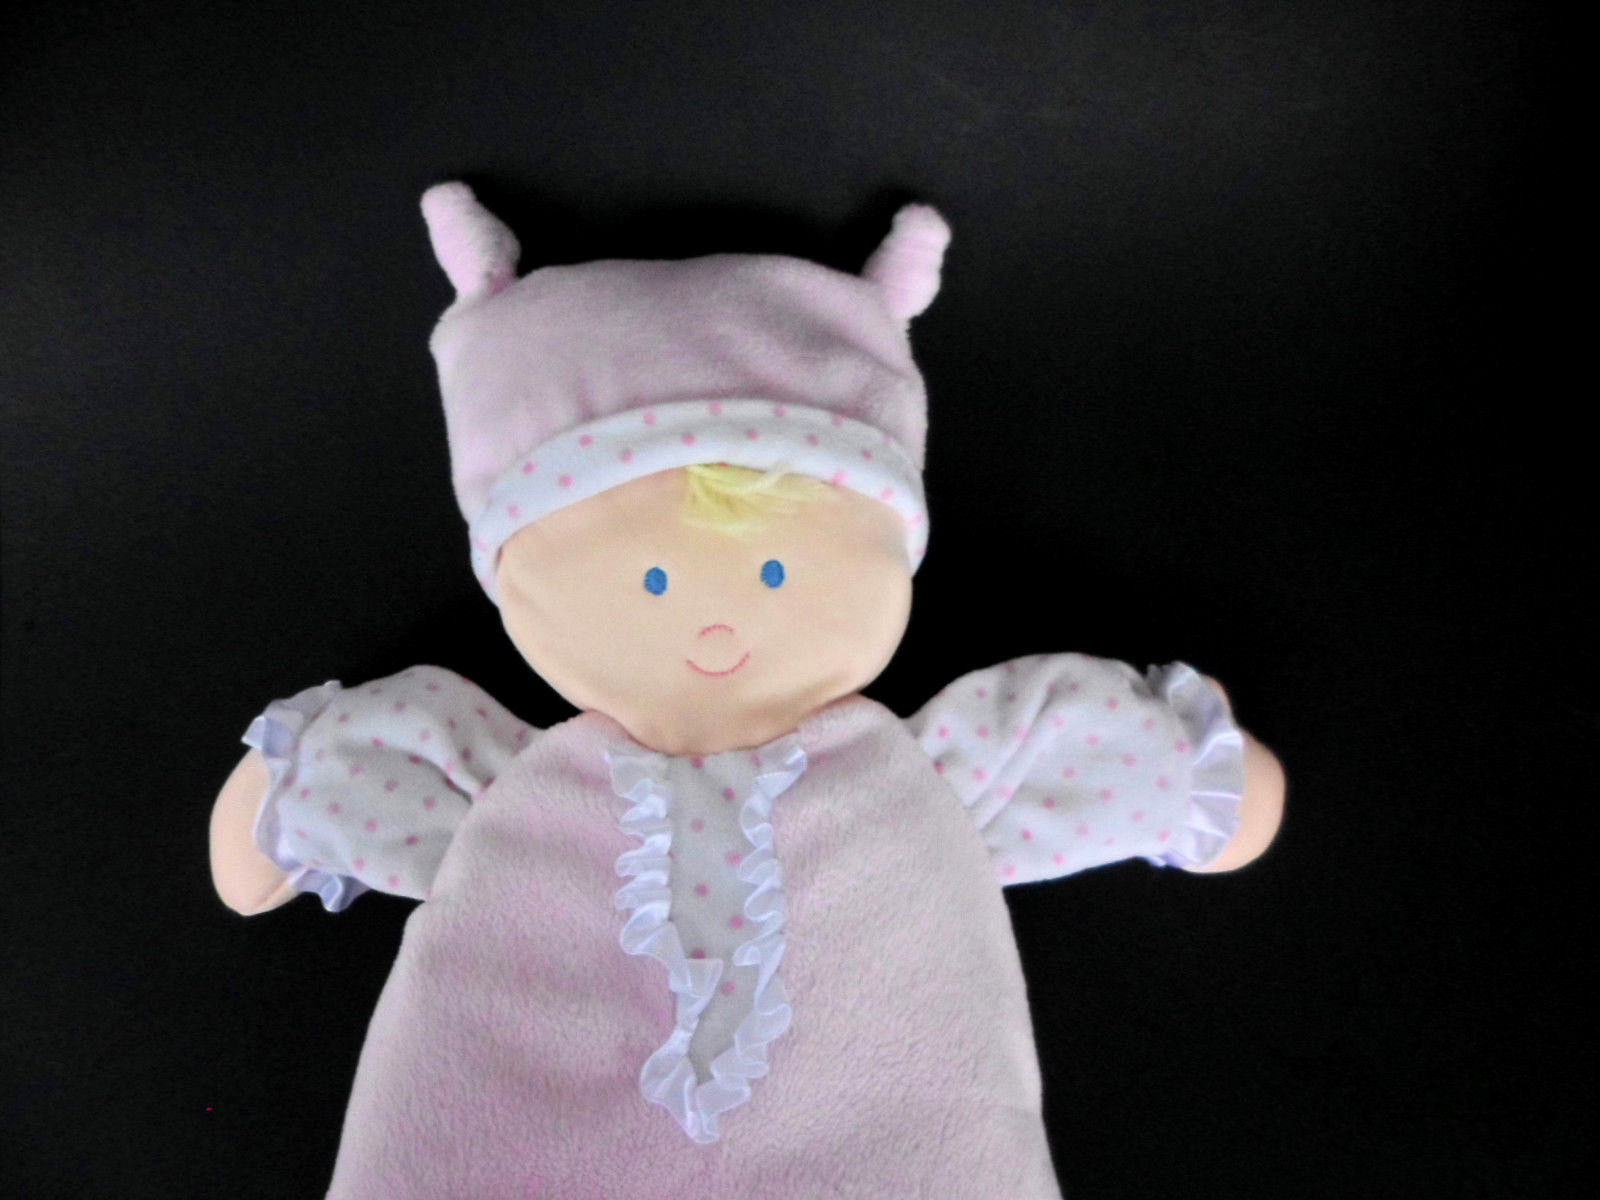 Kids Preferred Pink White Baby Doll Plush Polka Dot Knot Hat Lovey Stuffed Toy - $28.37